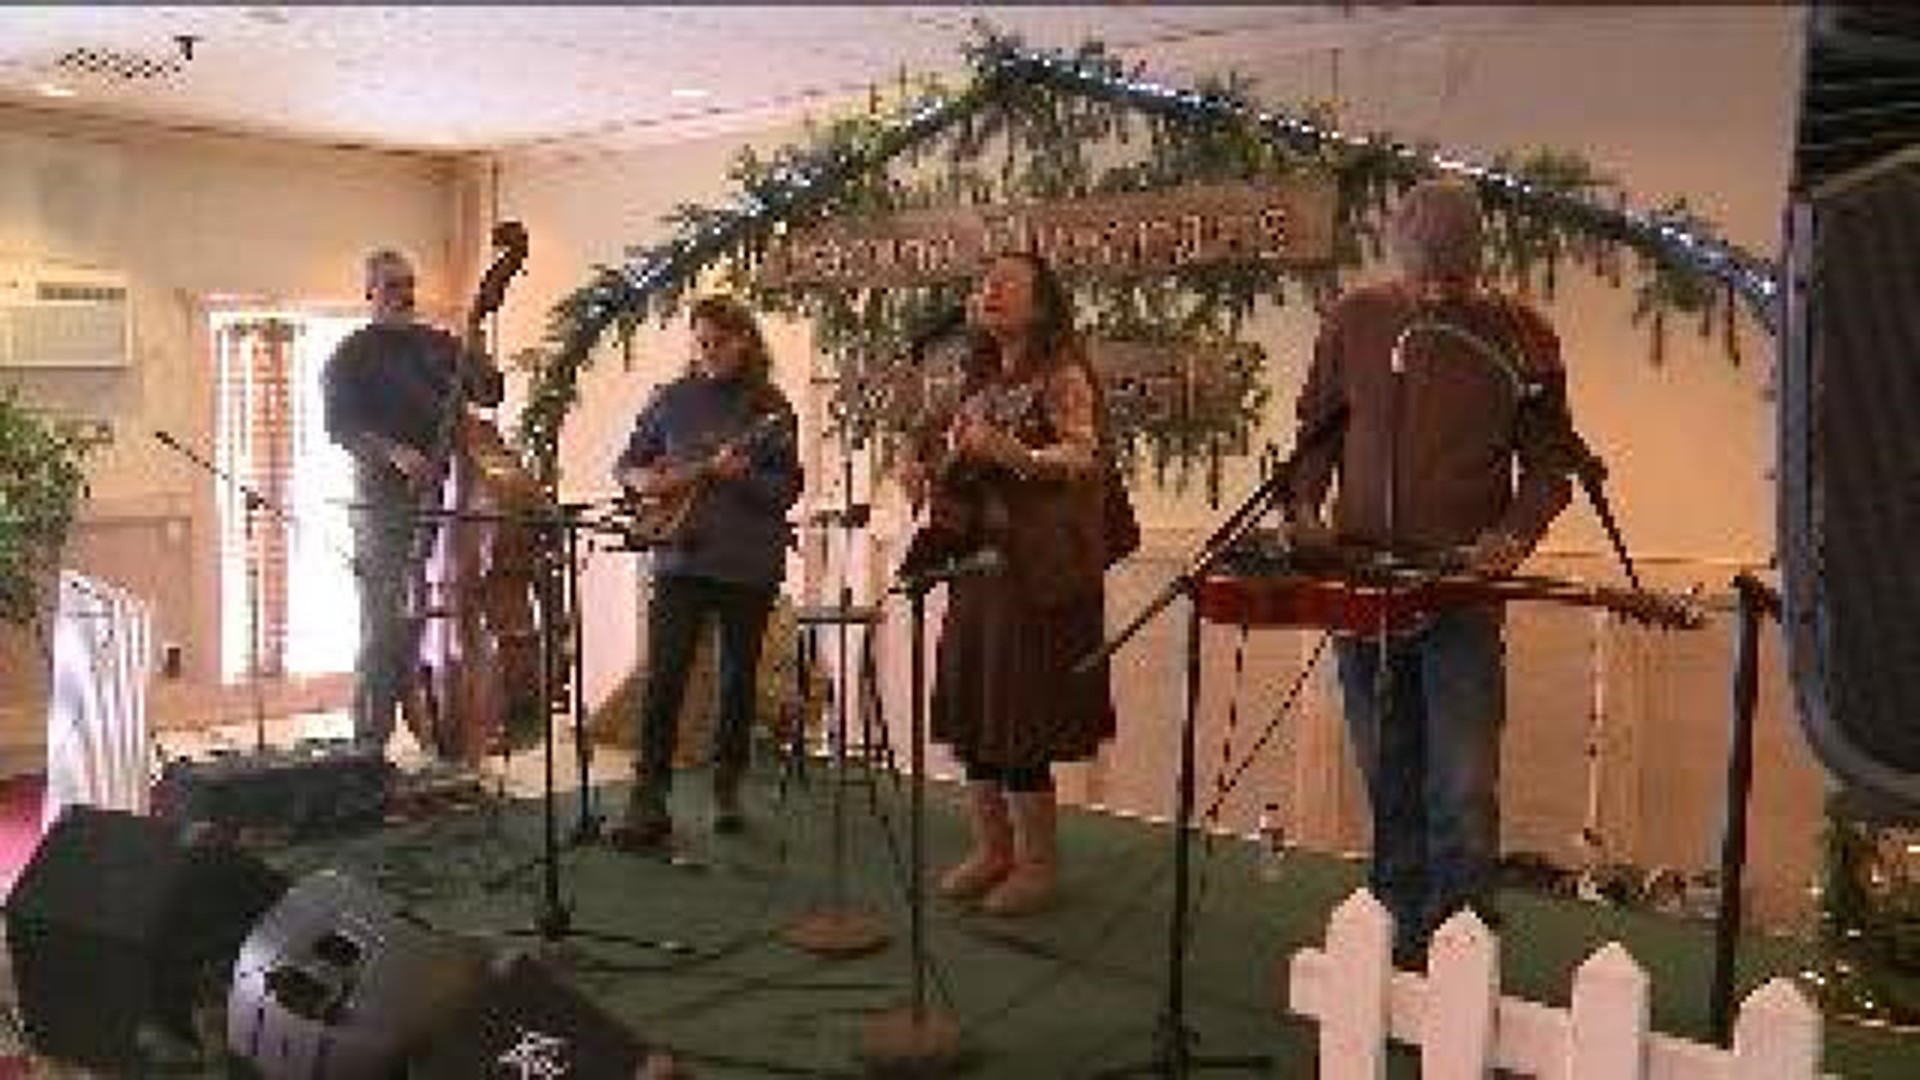 Annual Festival Highlights Bluegrass and Folk Music